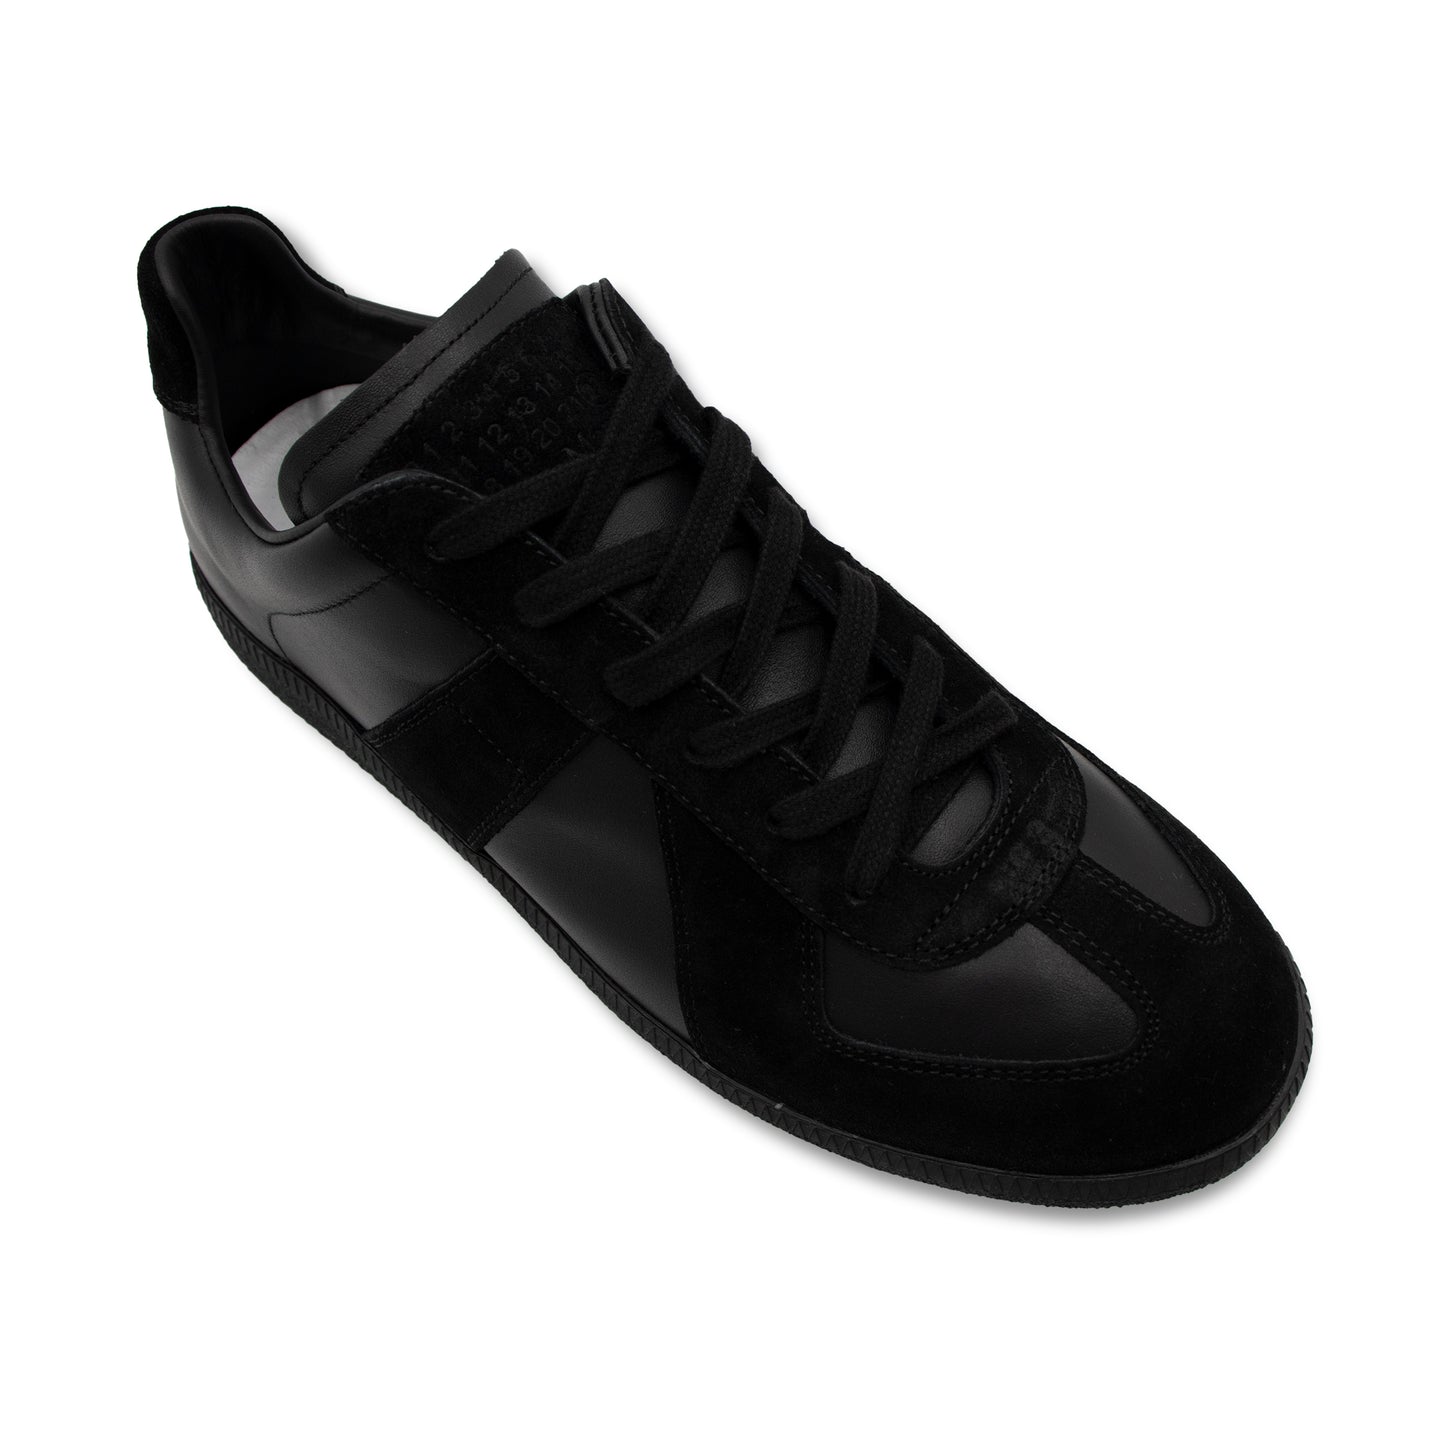 Replica Leather Sneakers in Black